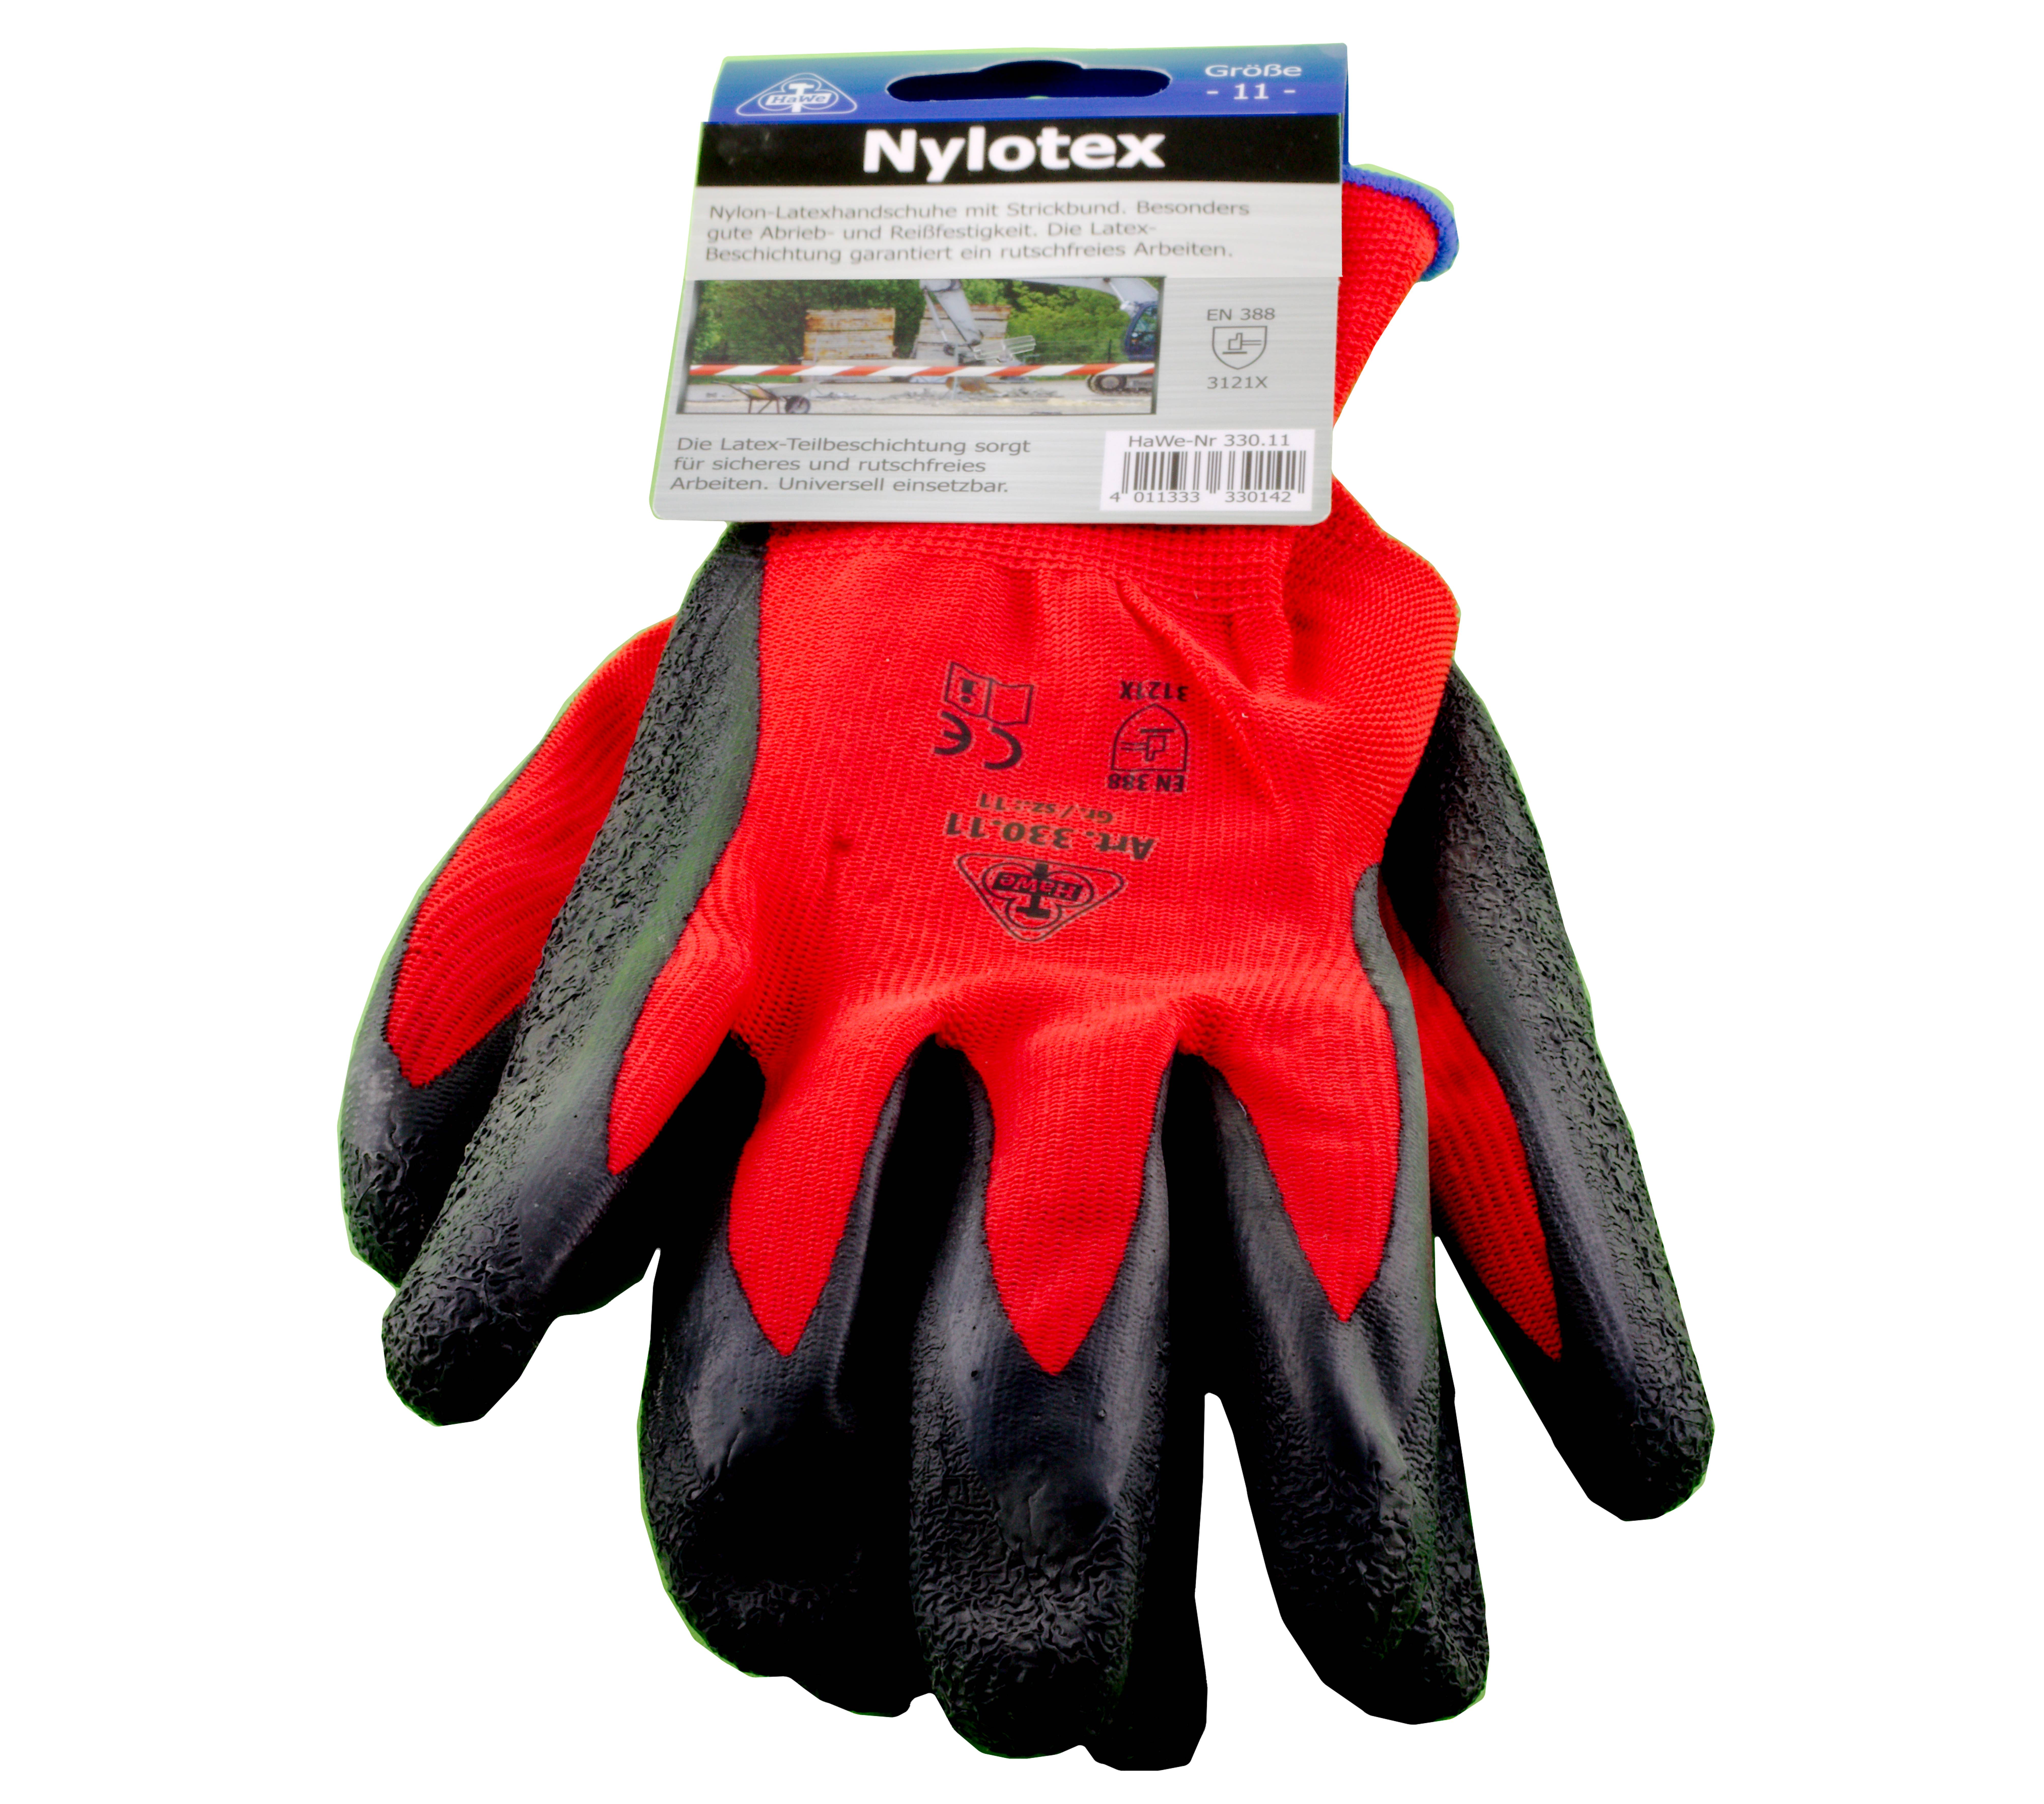 Handschuhe Nylotex rot-schwarz  Gr. 11